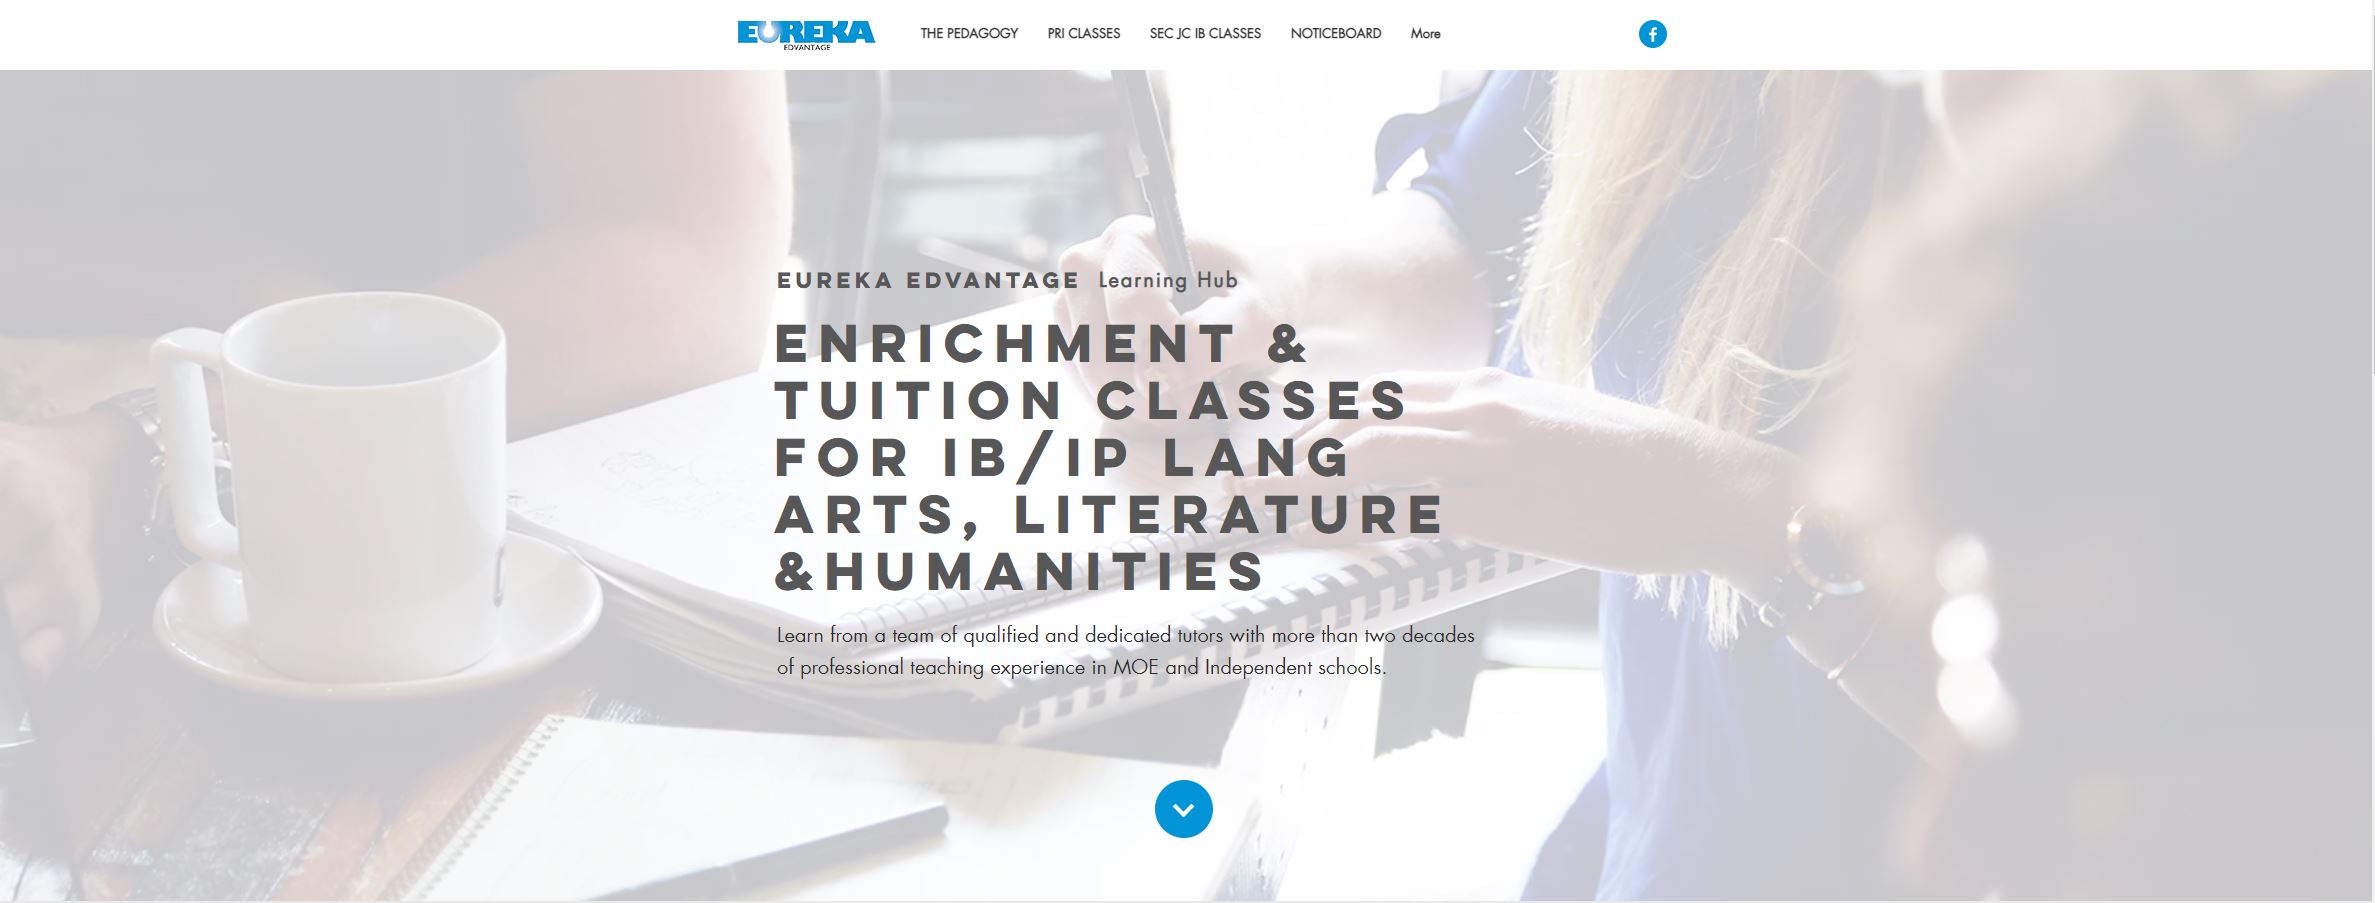 Eureka Edvantage Learning Hub IB Tuition